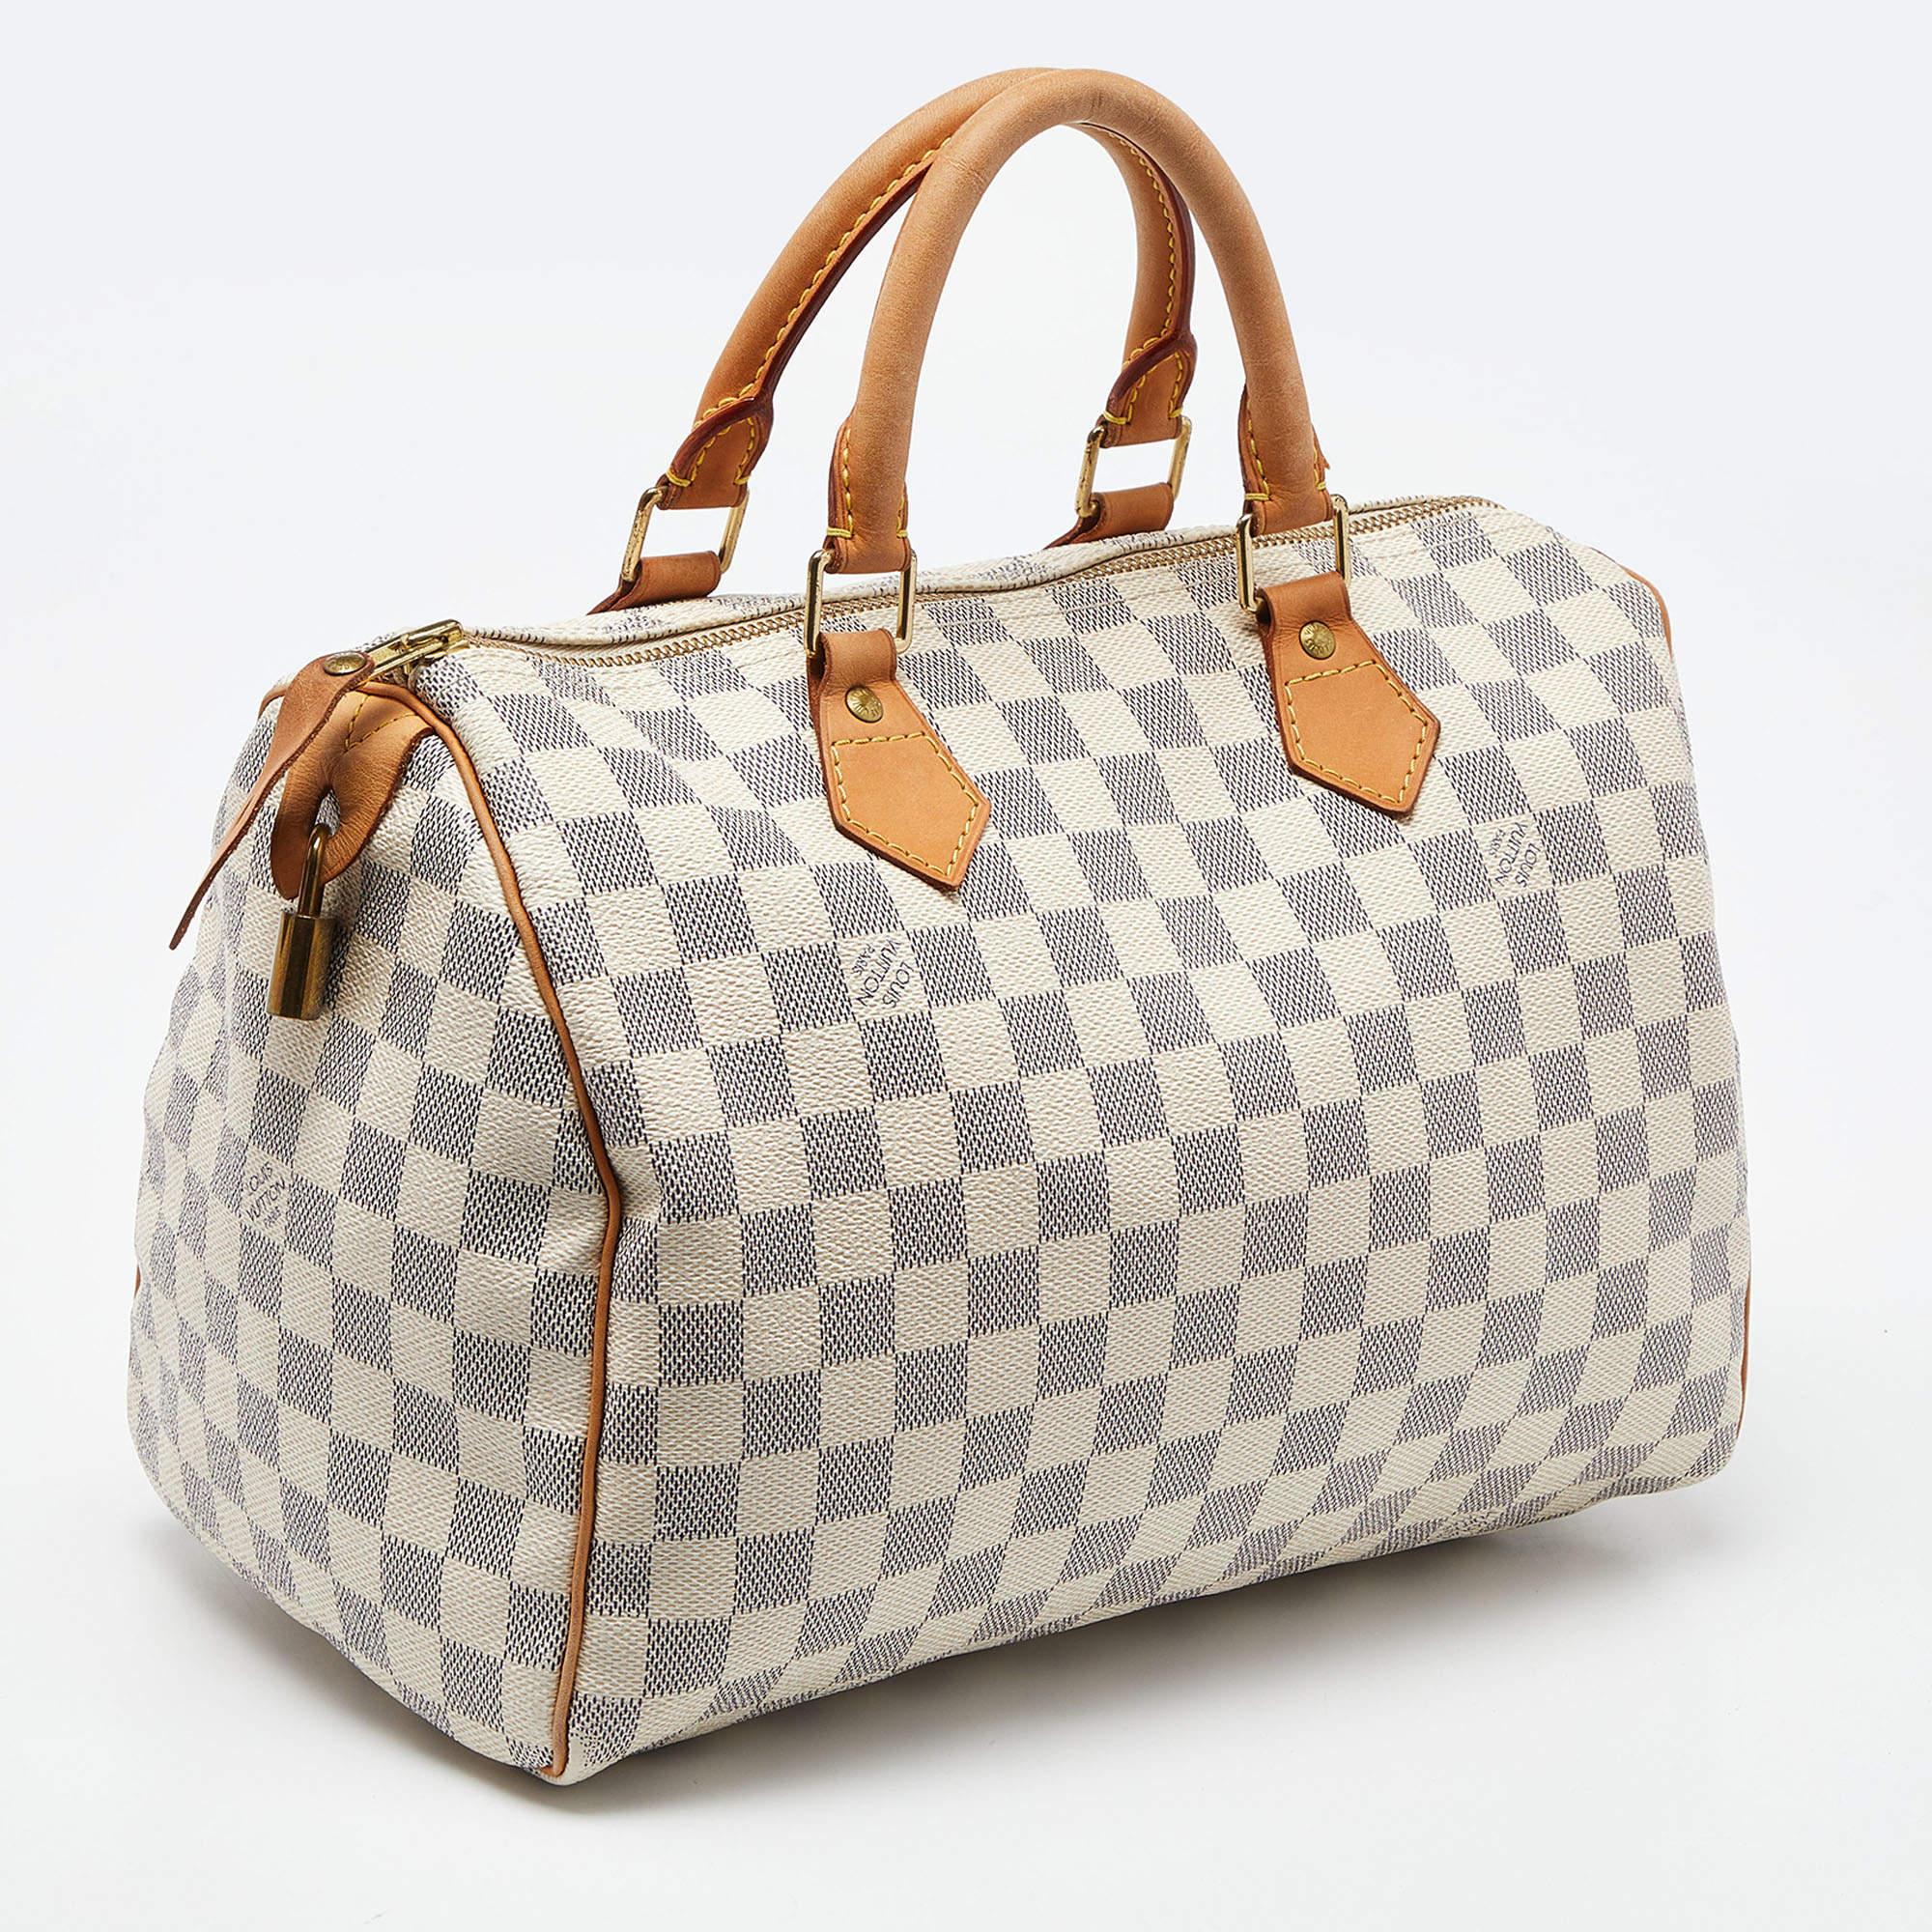 Louis Vuitton Damier Azur Canvas Speedy 30 Bag In Good Condition For Sale In Dubai, Al Qouz 2